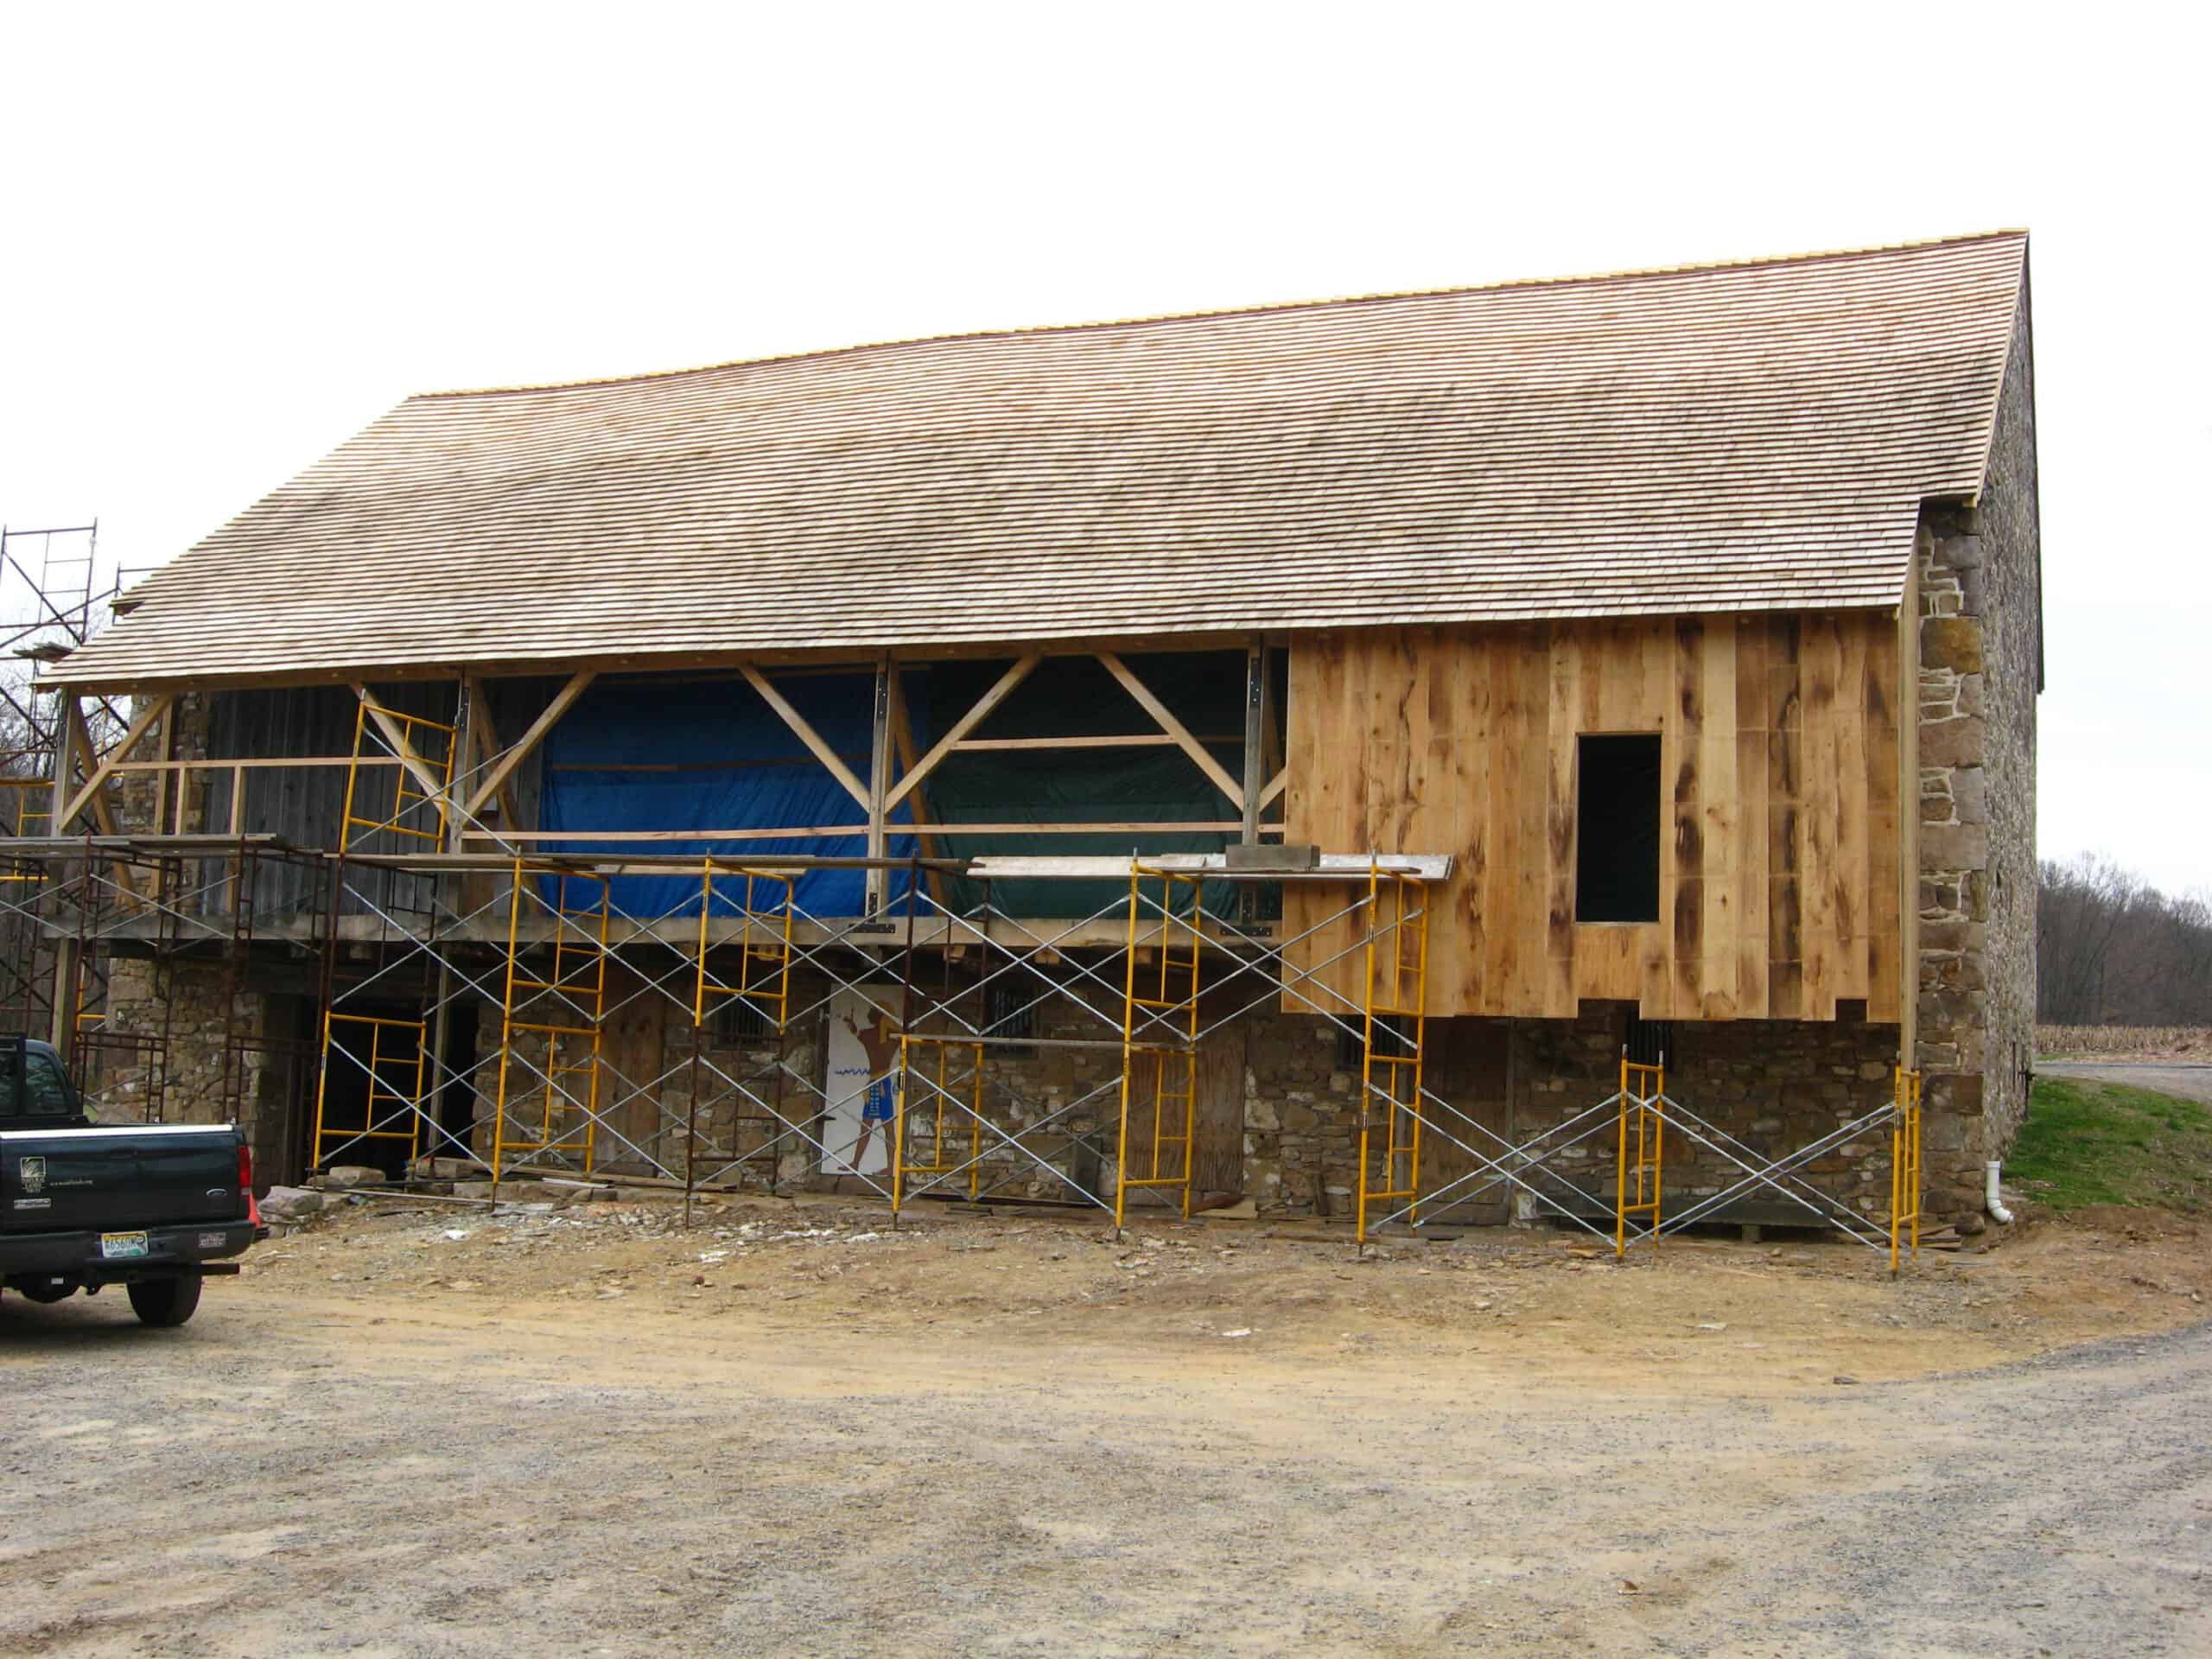 Barn renovations at Crow's Nest Preserve.